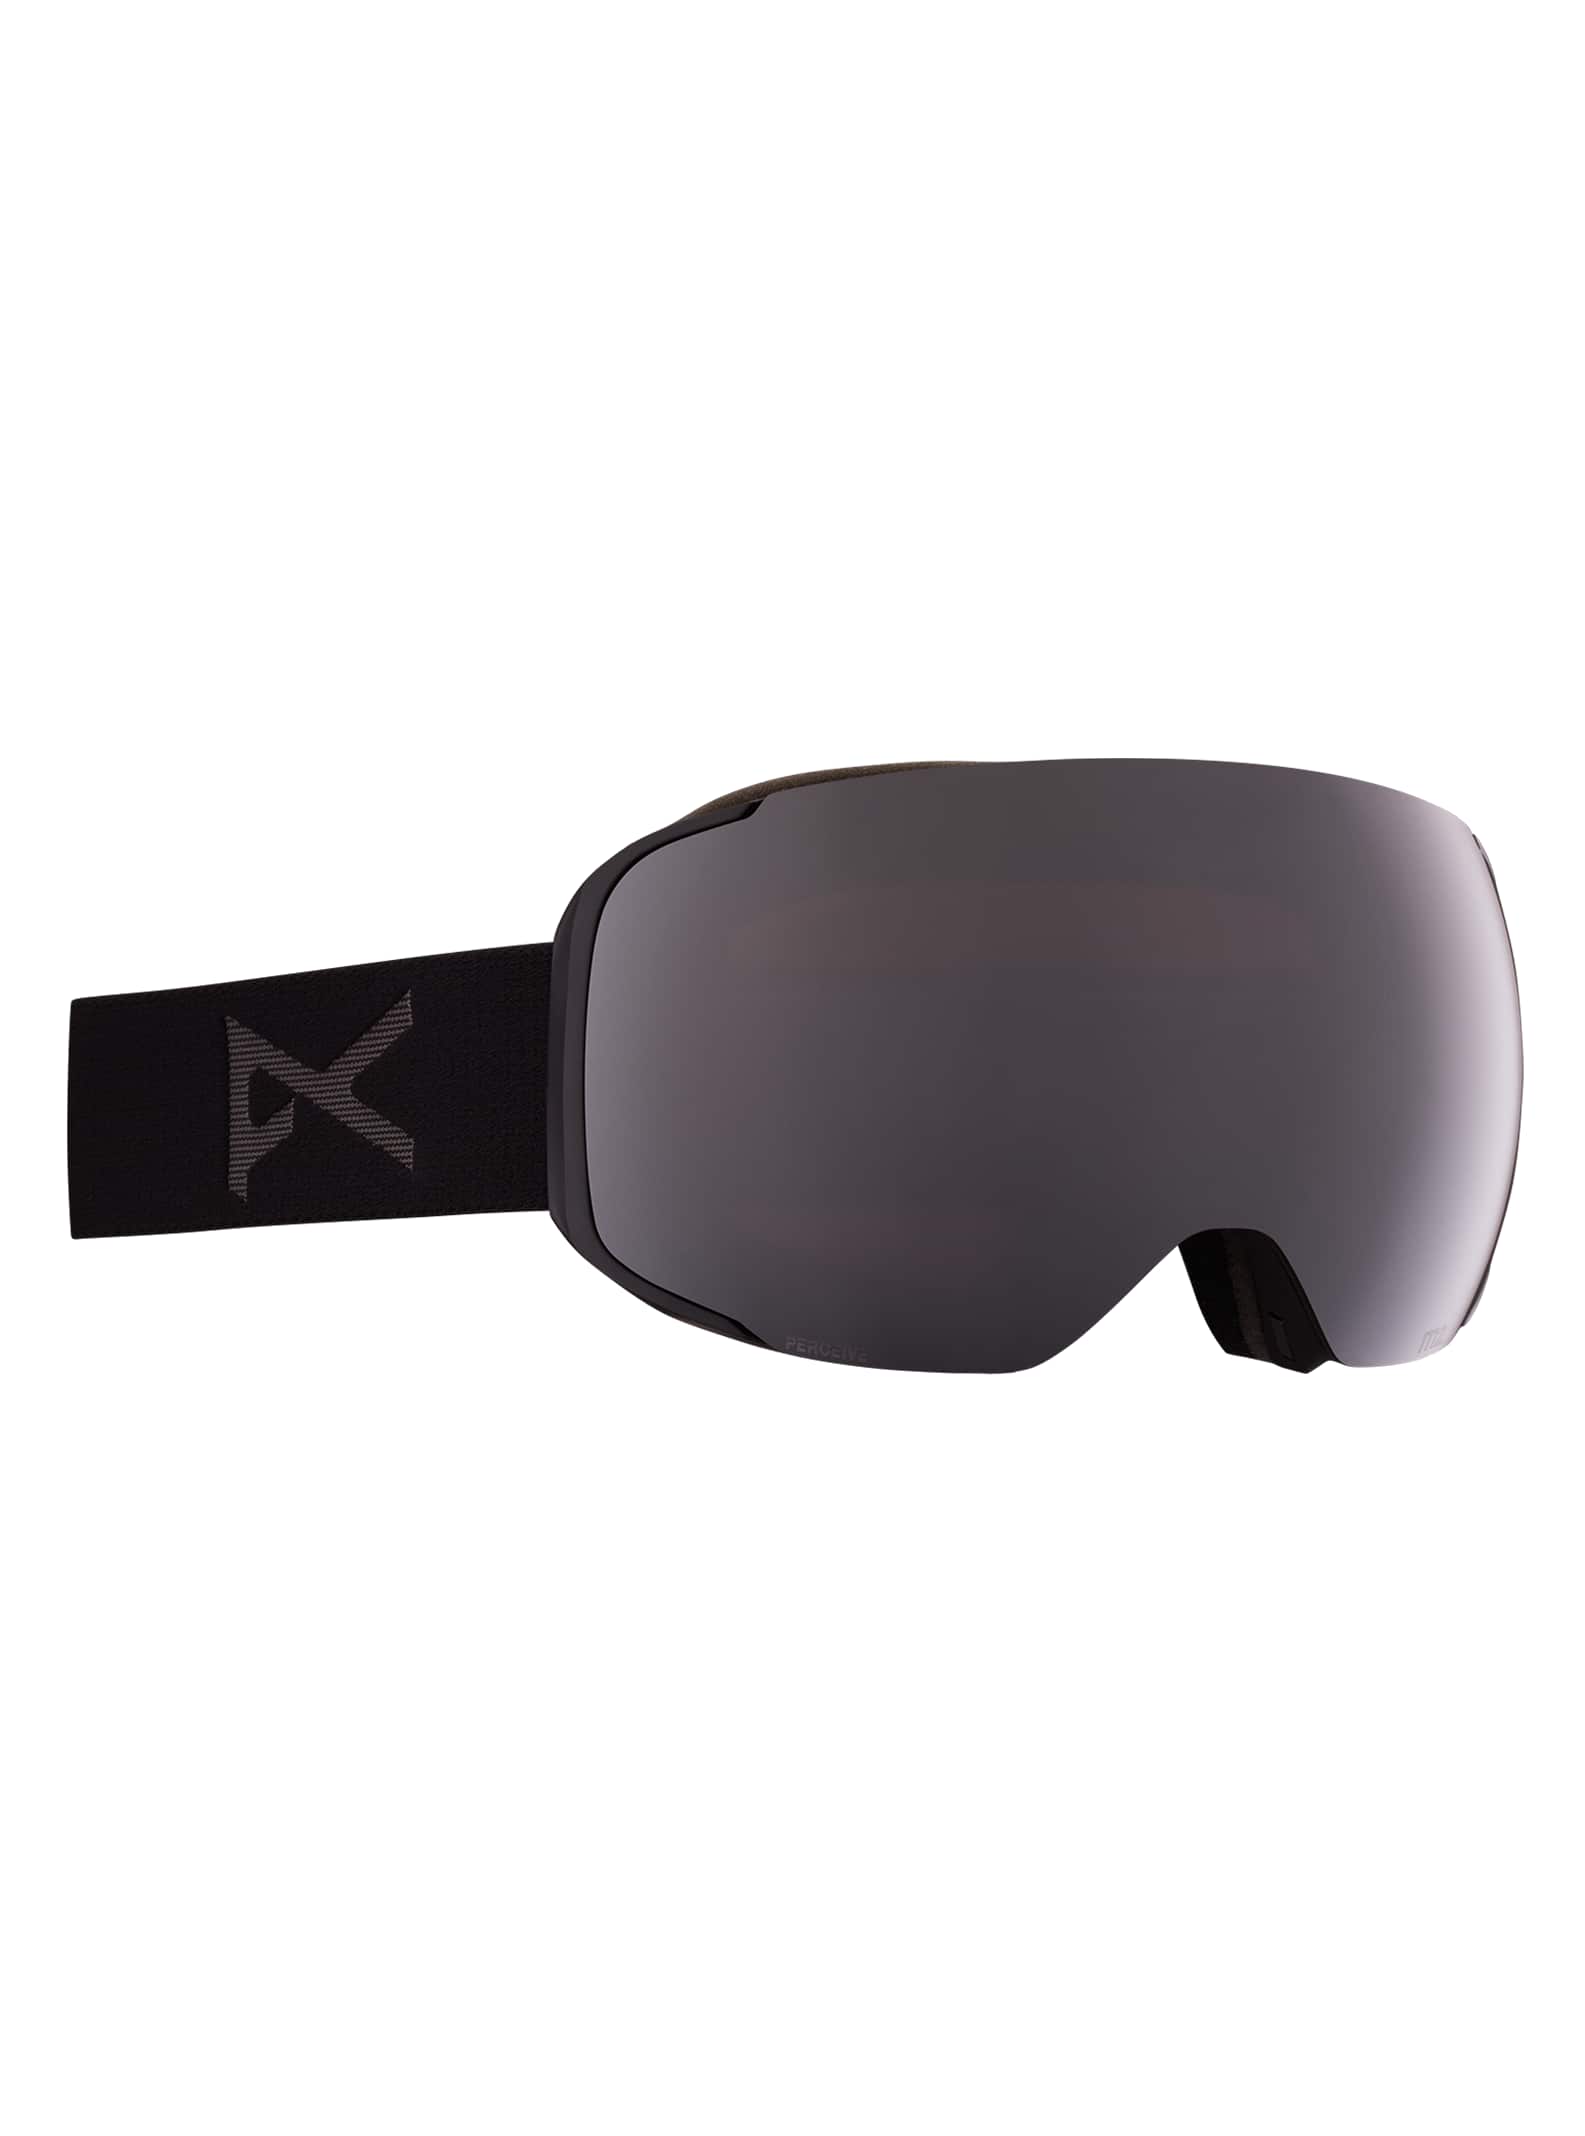 Anon Anon M2 Goggles + Bonus Lens + MFI® Face Mask Frame: smoke, lens: perceive sunny onyx (6% / s4), spare lens: perceive variable violet (34% / s2)